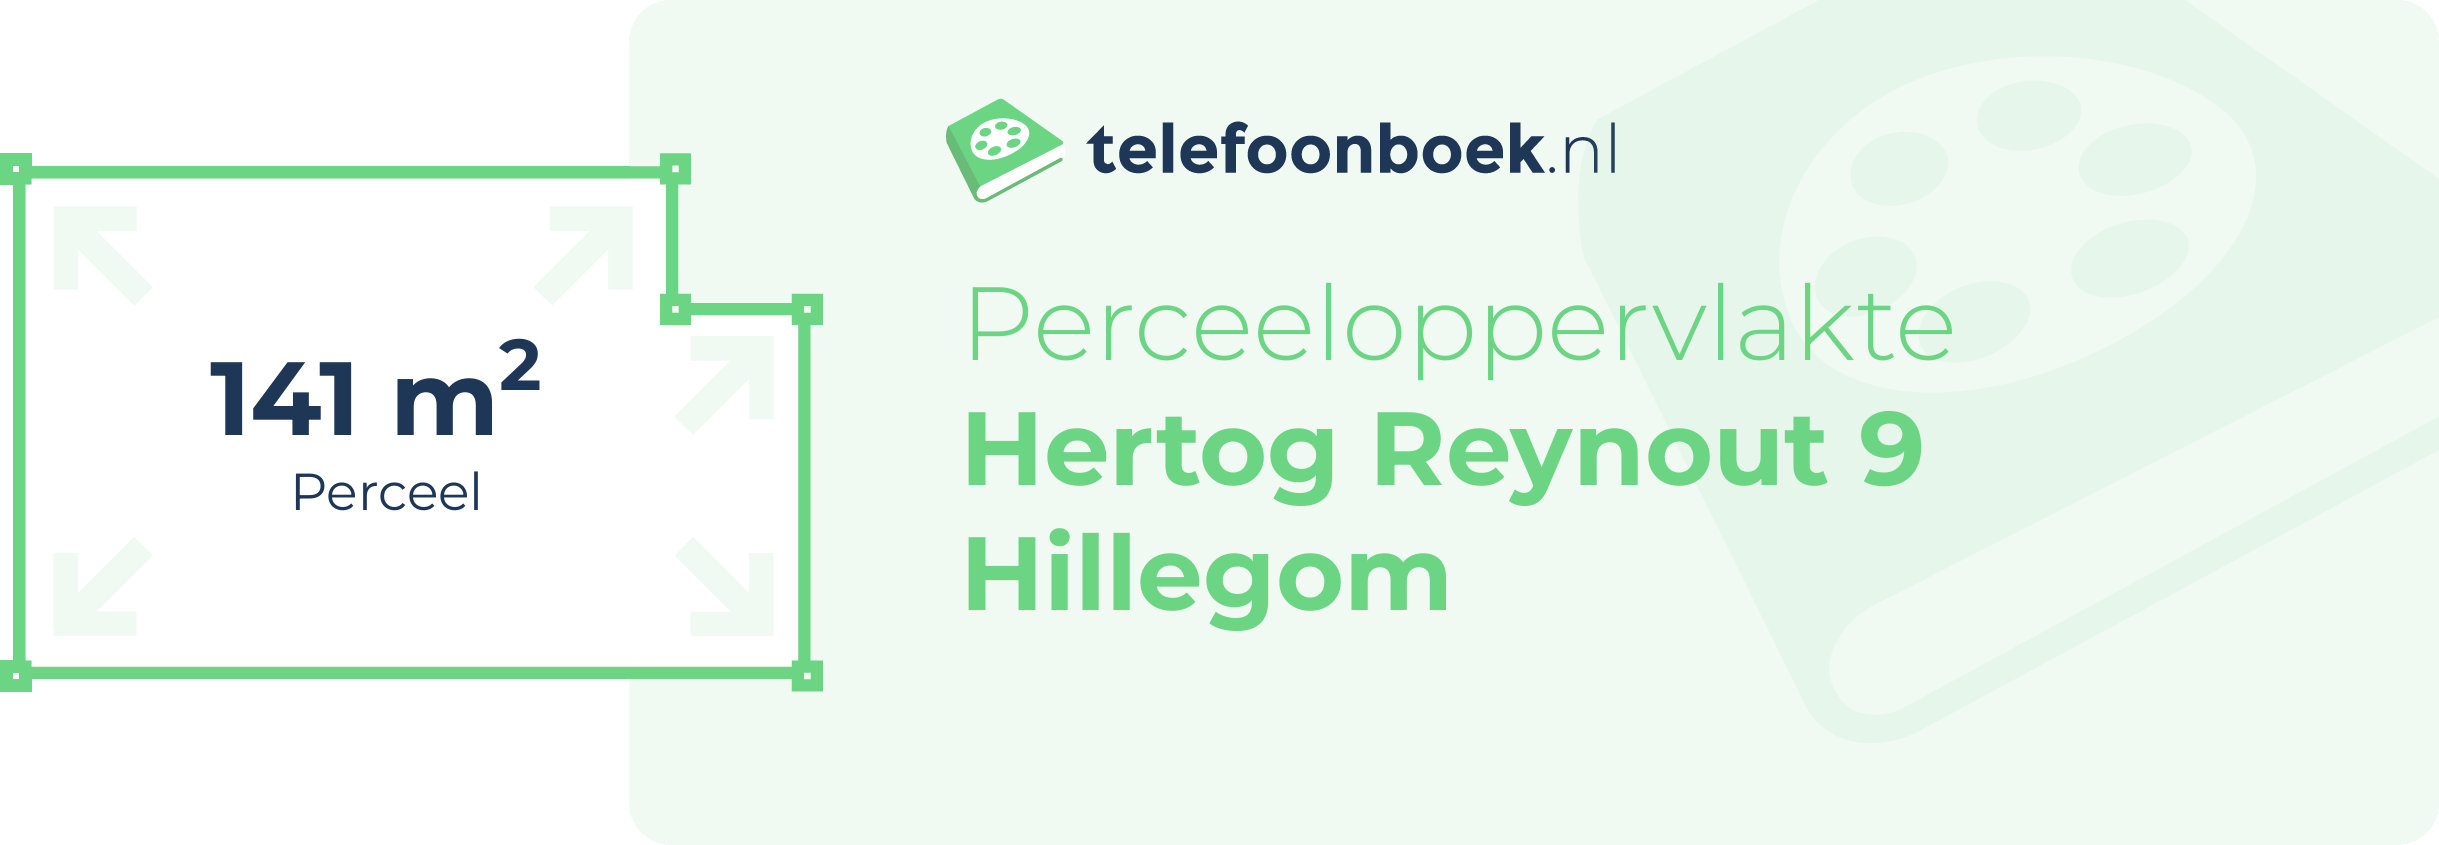 Perceeloppervlakte Hertog Reynout 9 Hillegom